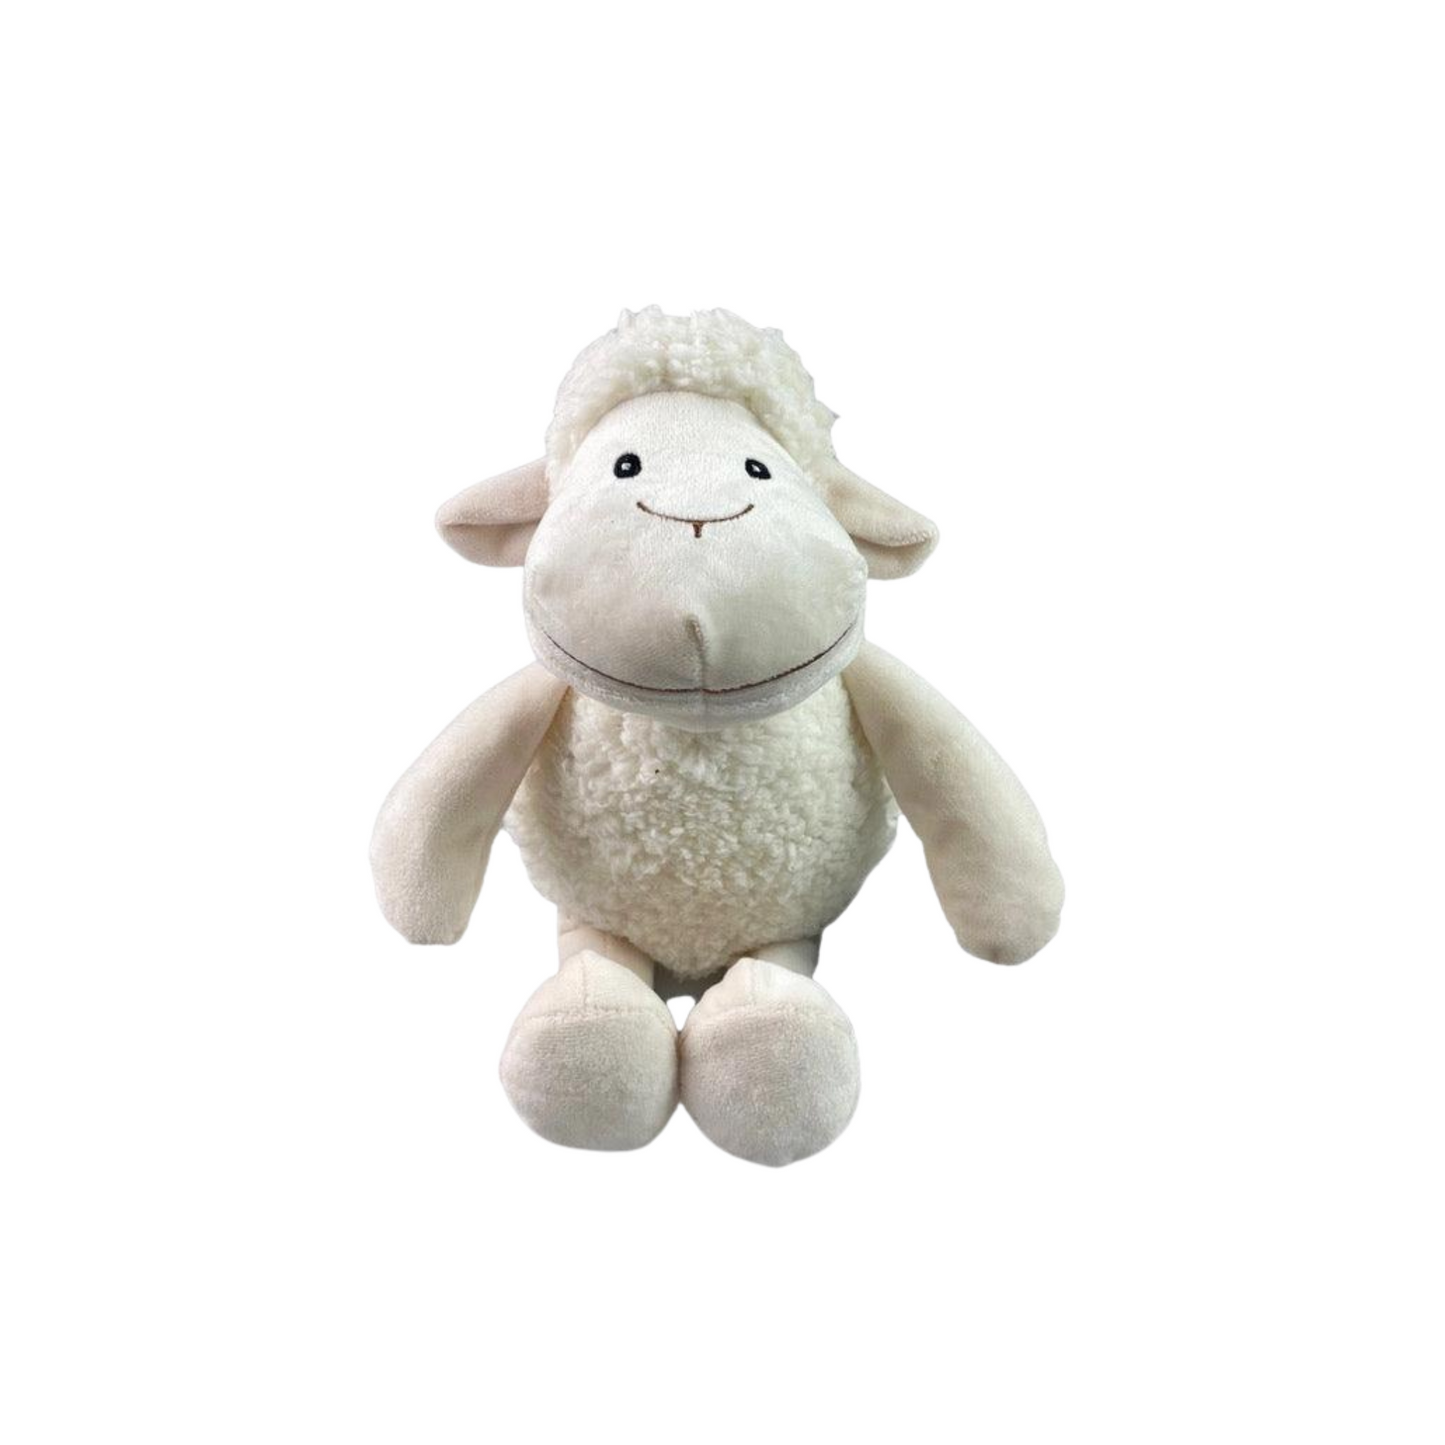 A cute sheep dog toy